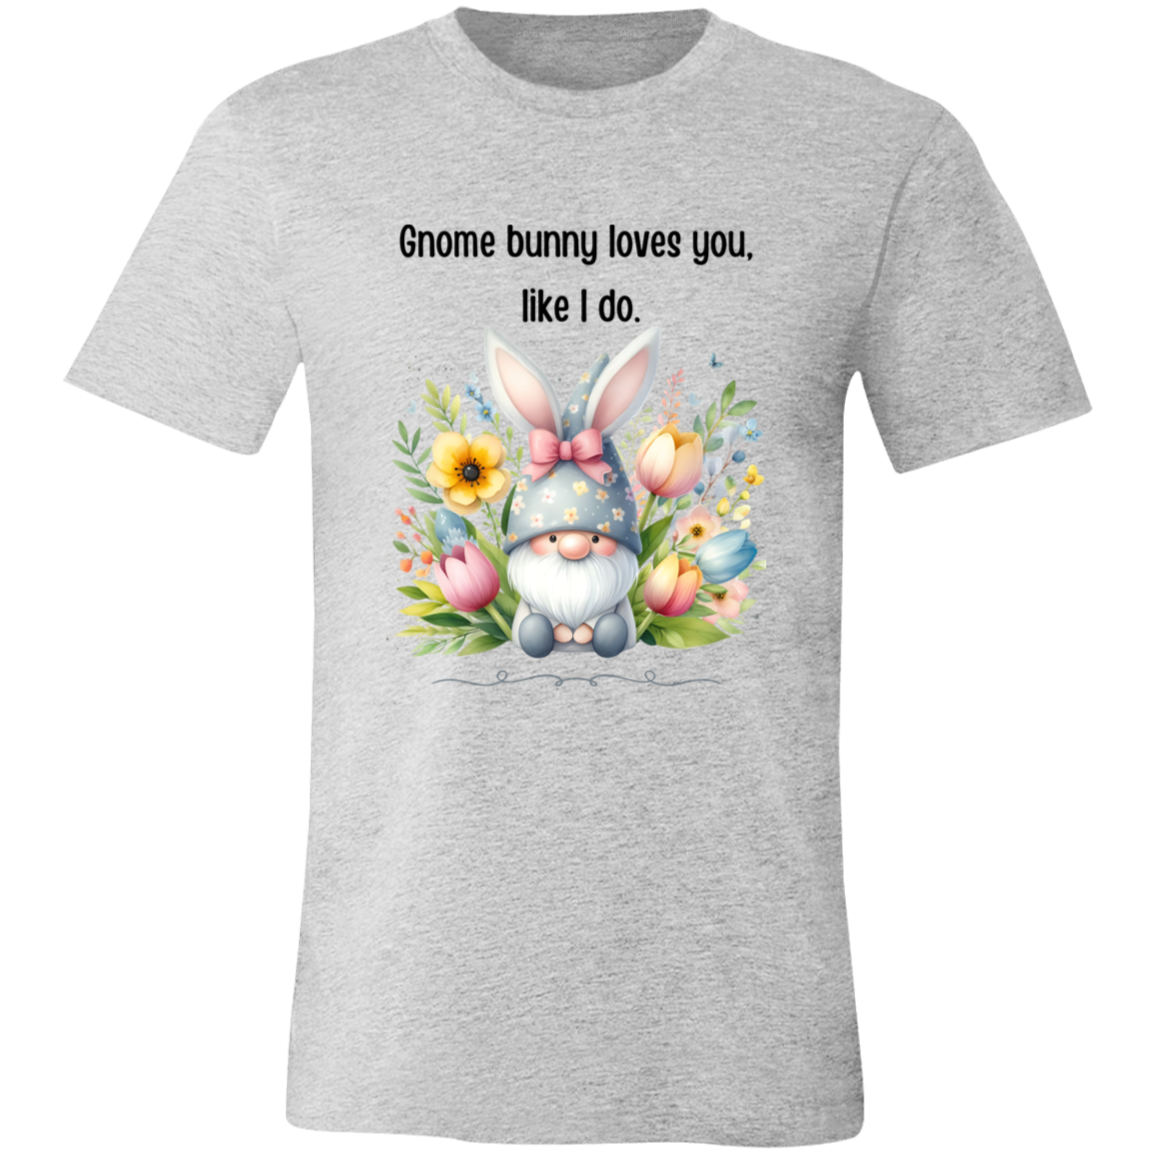 Gnome bunny loves you, like I do T-shirt Short sleeve, easter gnome, funny shirt unisex